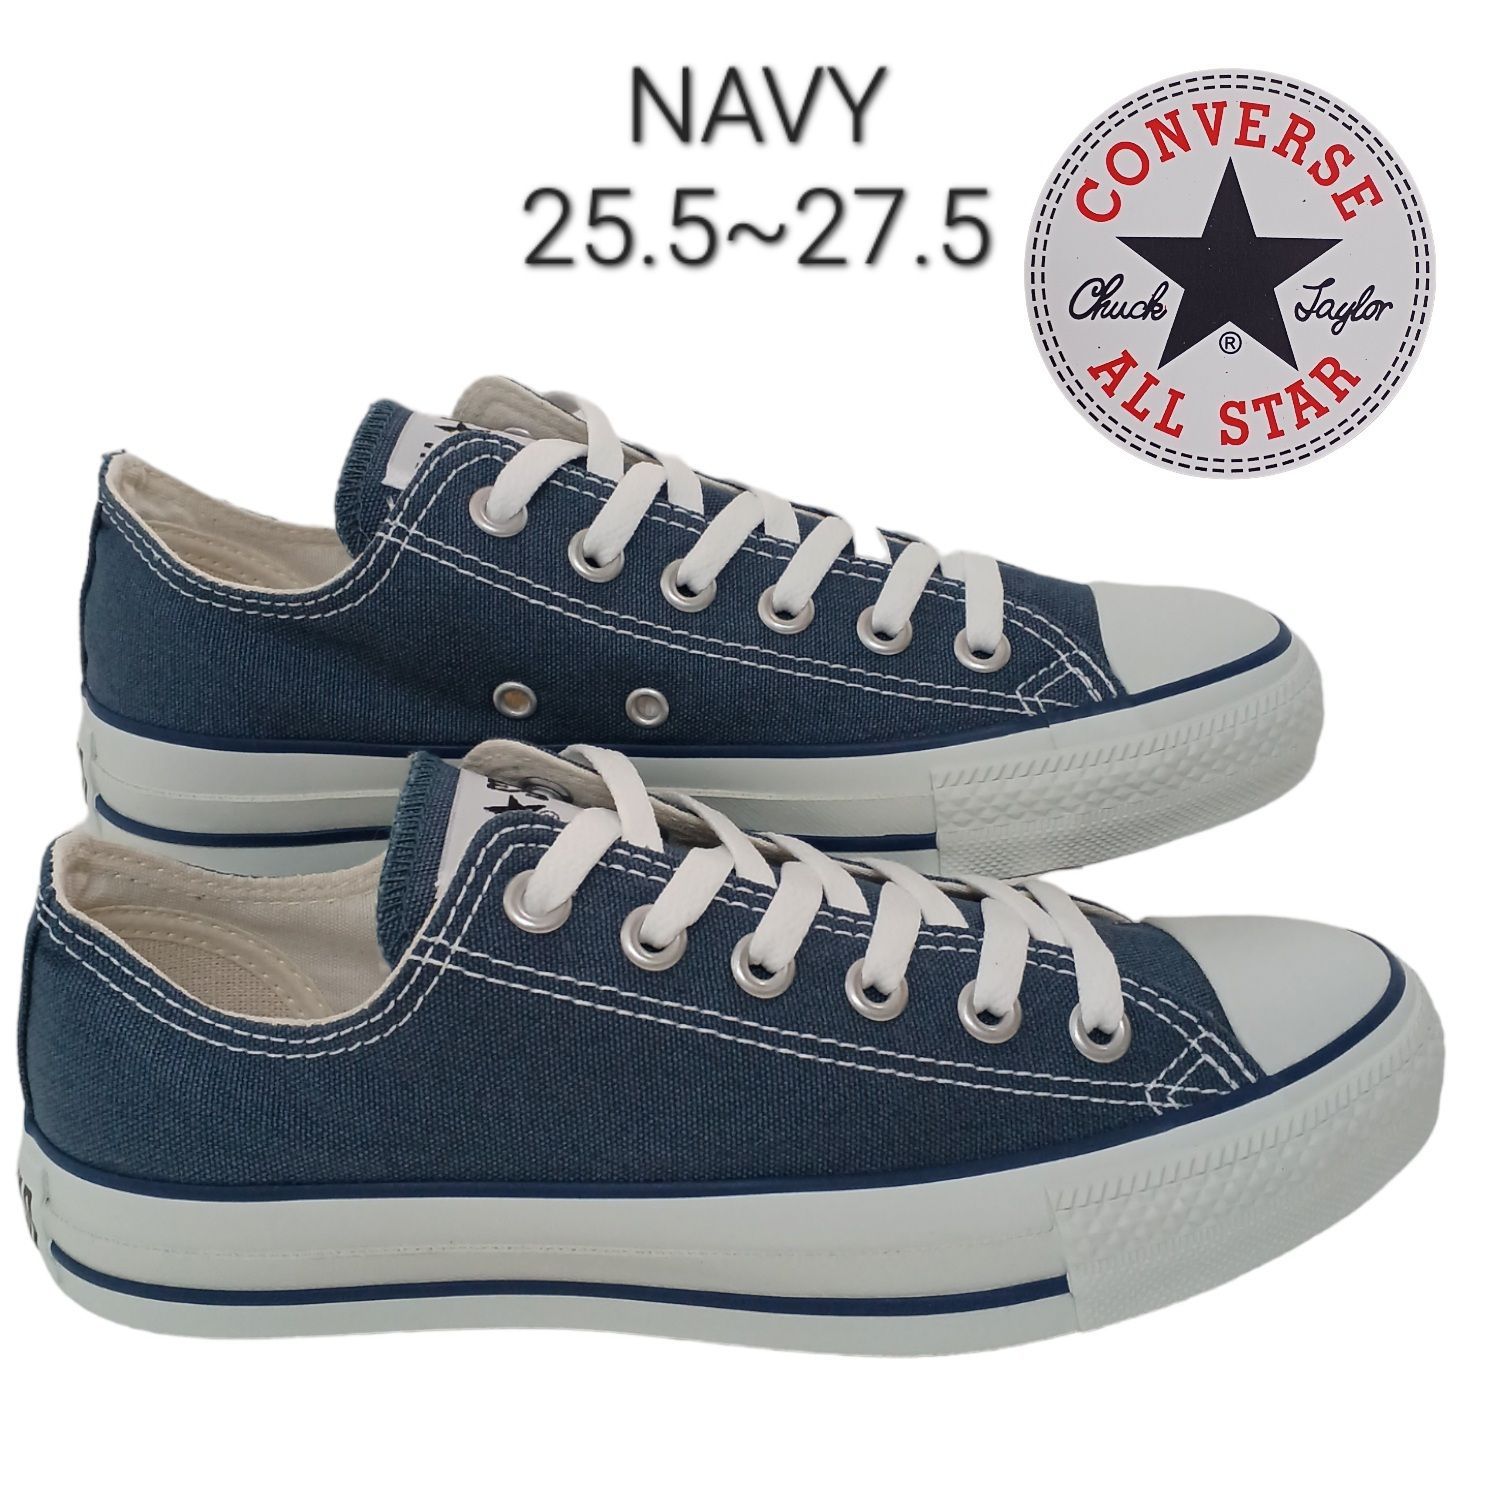 Converse All Star Ox Navy 25.5cm